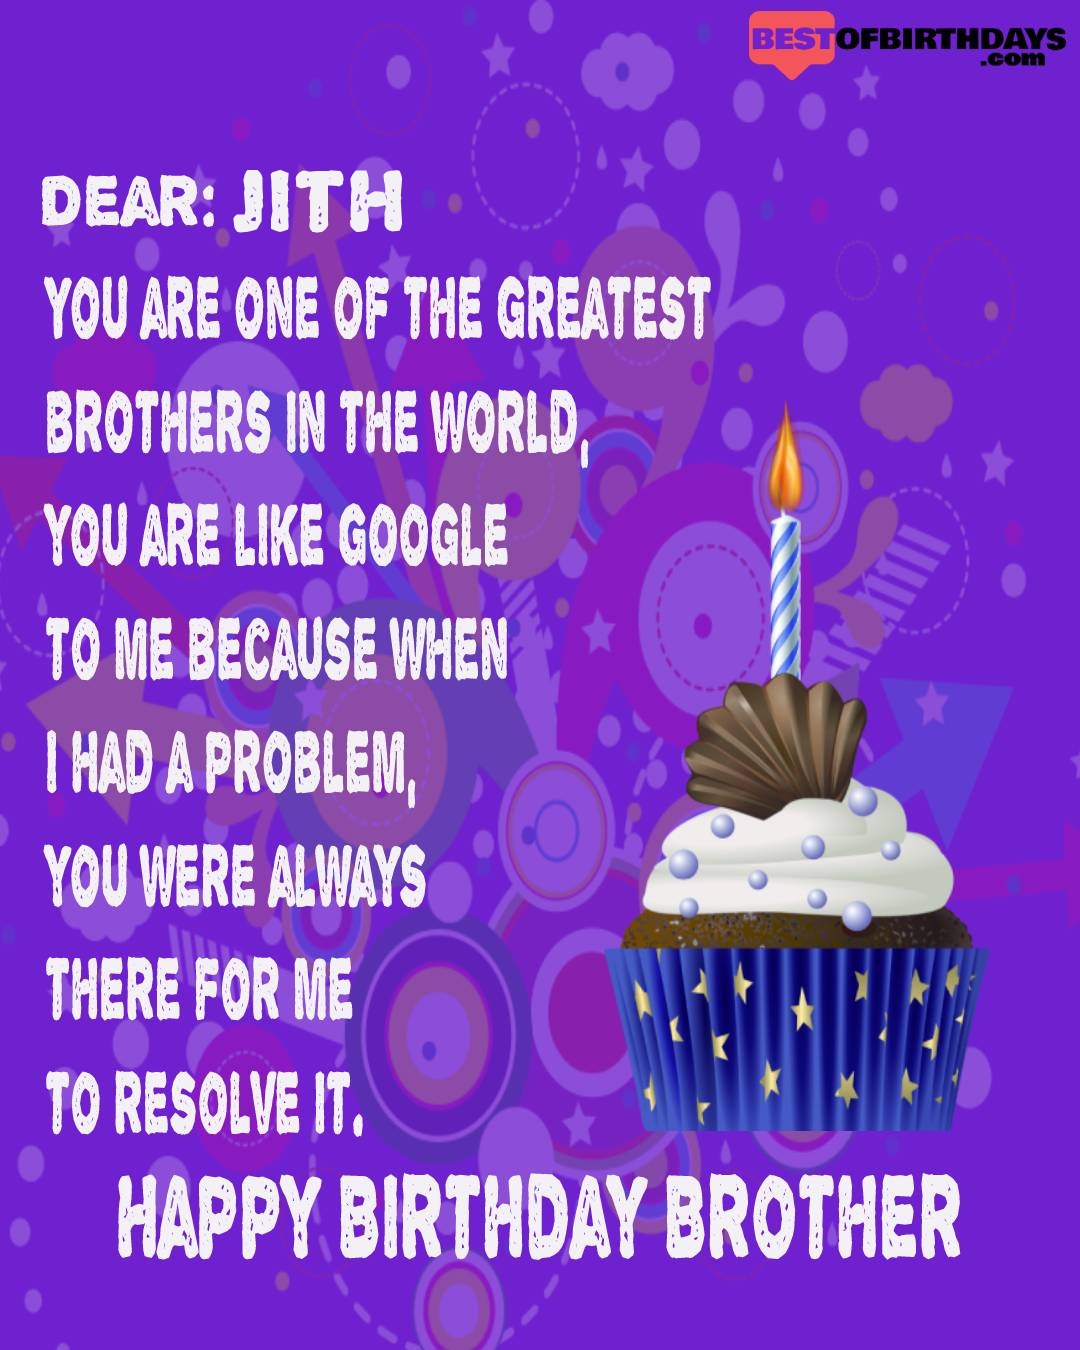 Happy birthday jith bhai brother bro